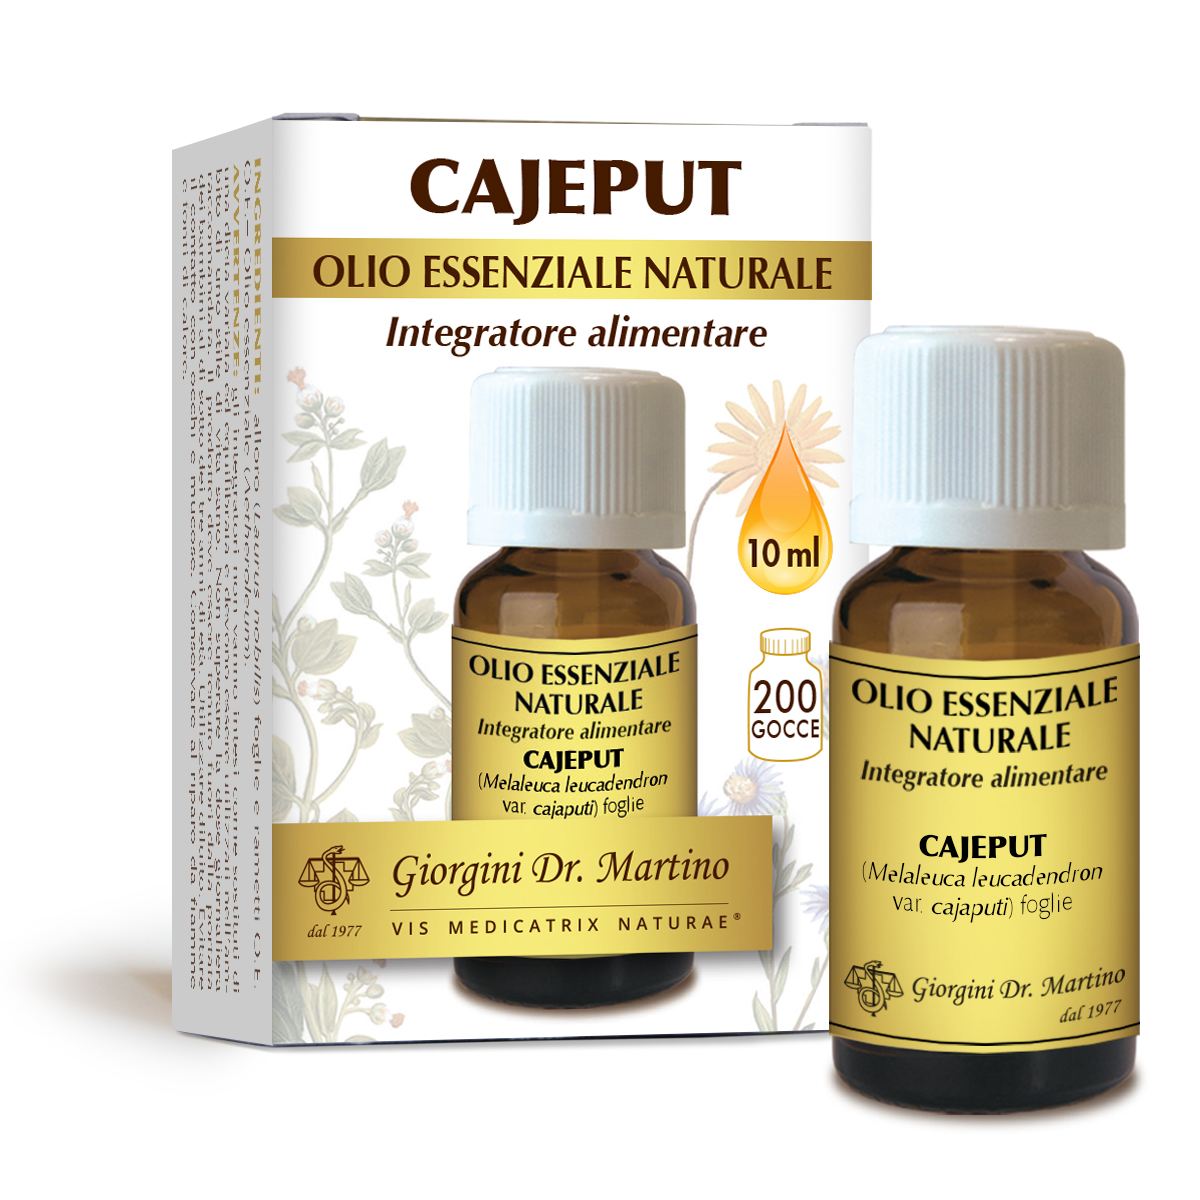 CAJEPUT natural essential oil 10 ml